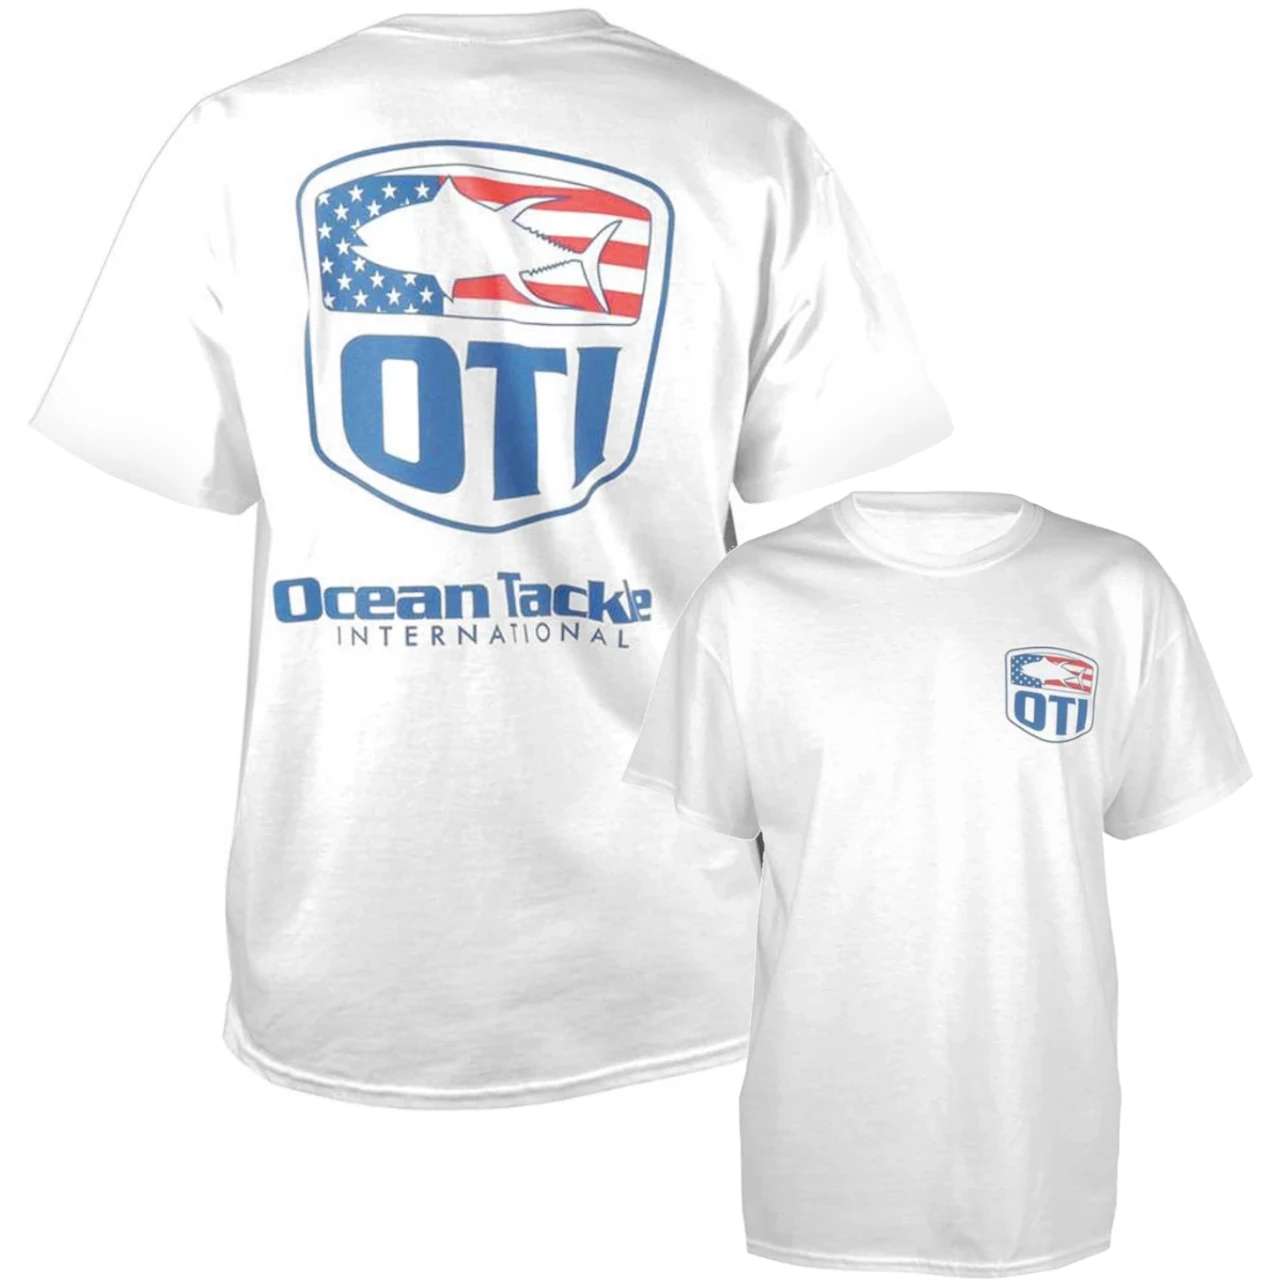 Ocean Tackle International America Flag Logo T-Shirt - White - L